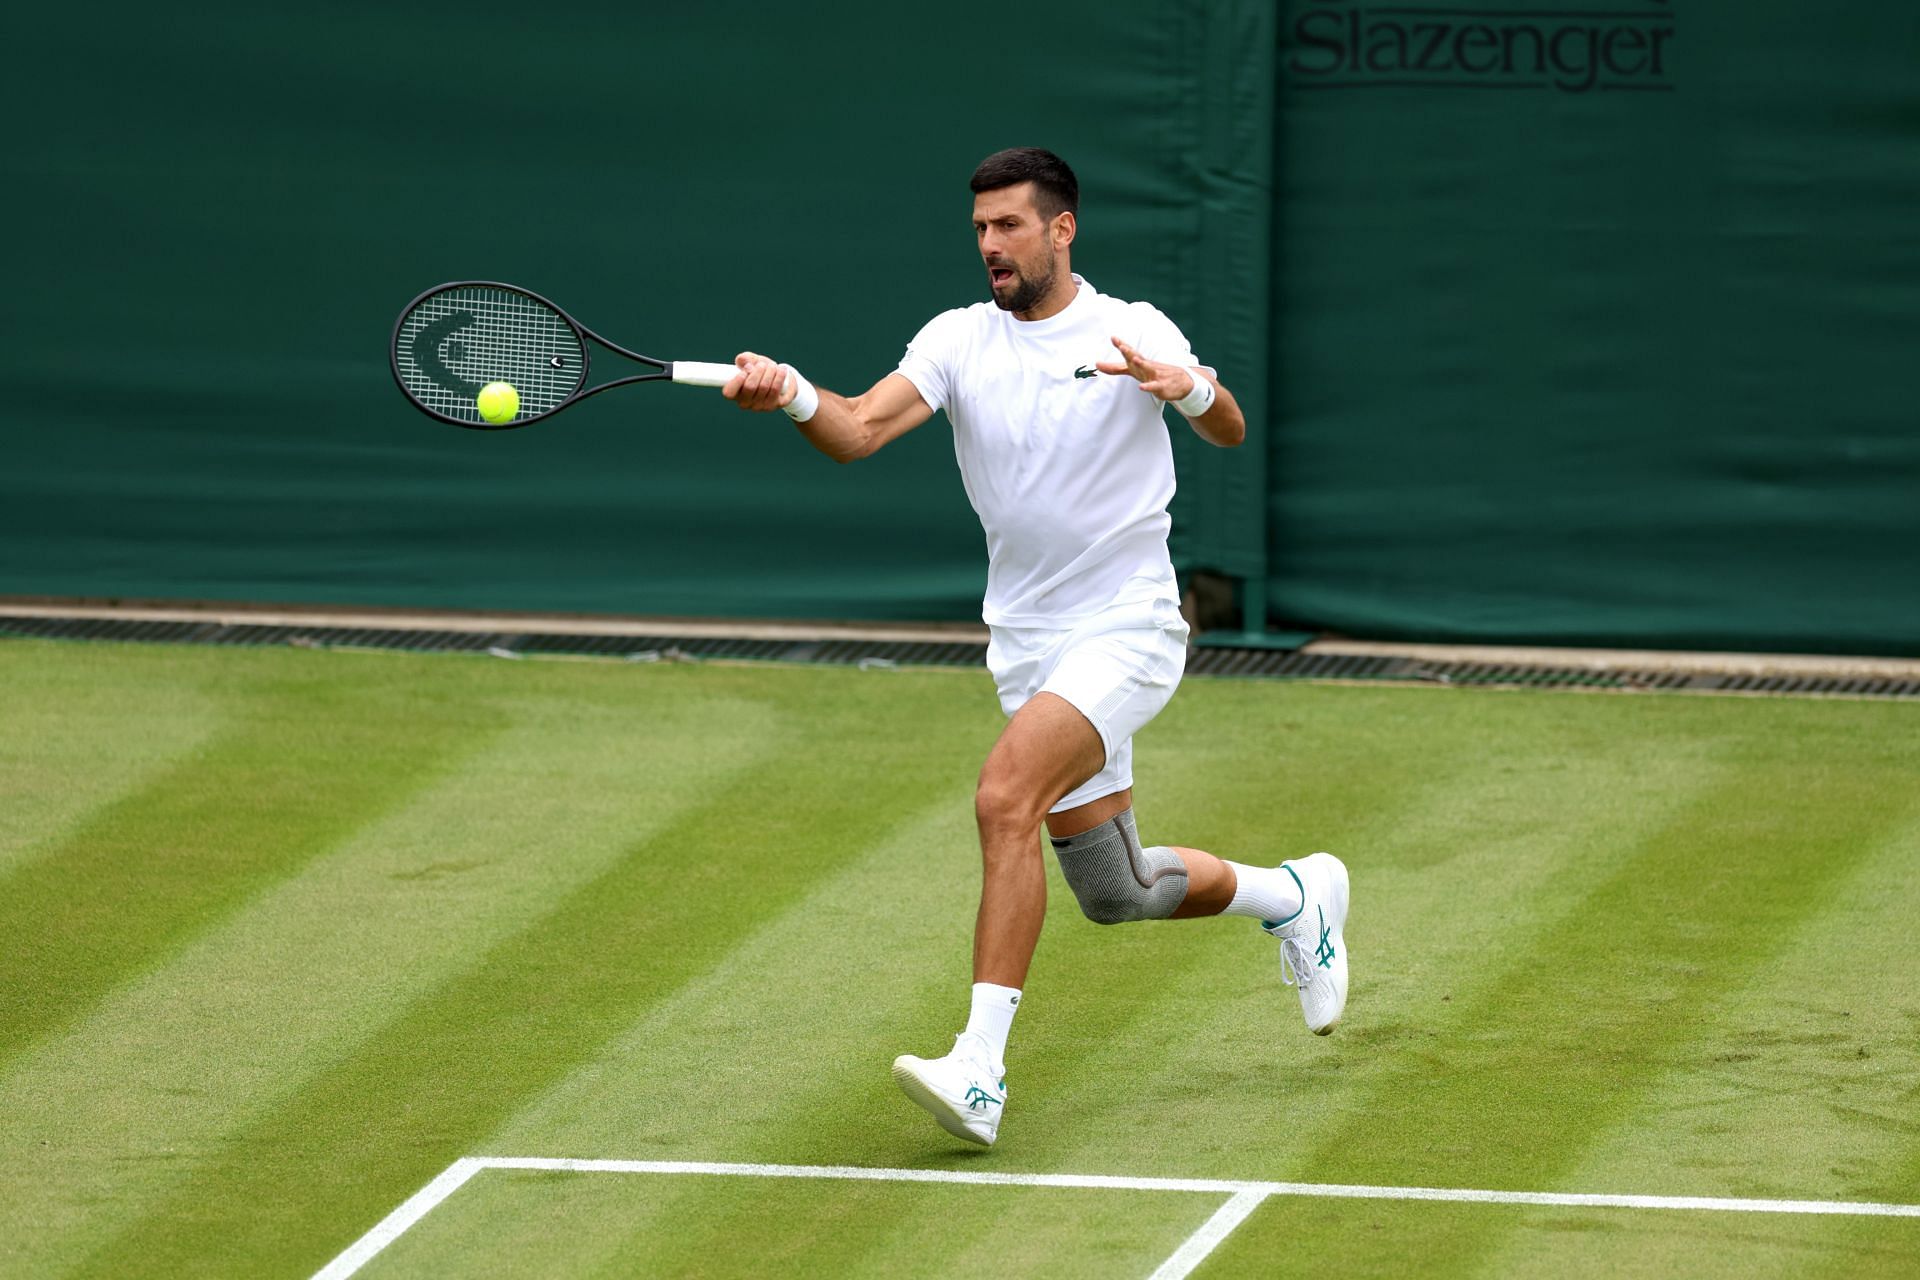 Novak Djokovic practicing at Wimbledon wearing a knee brace